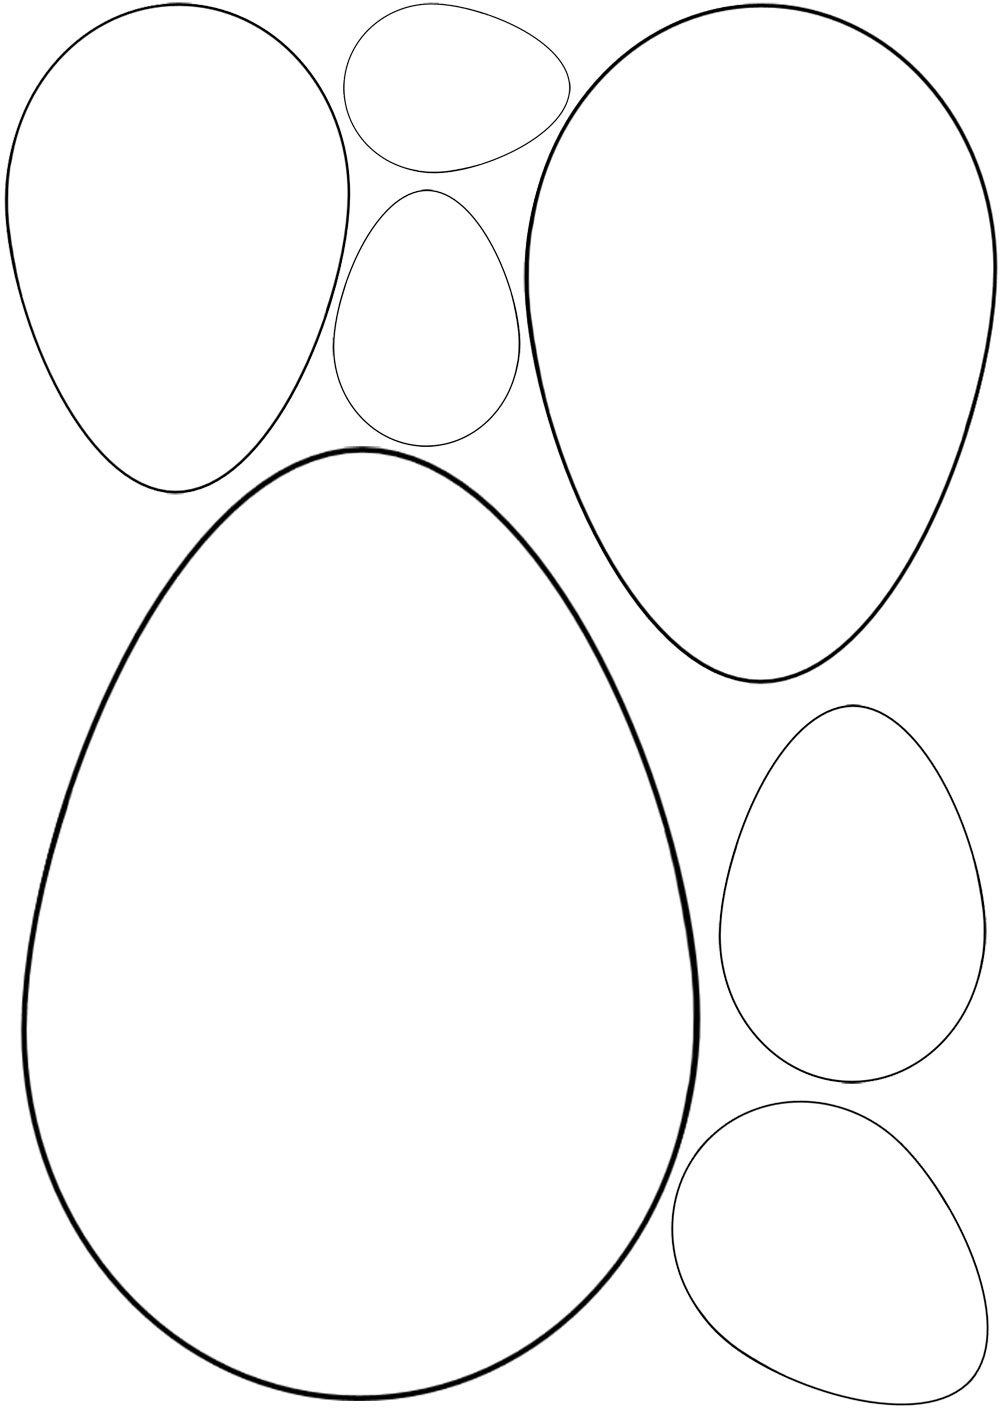 blank-easter-egg-templates-activity-shelter